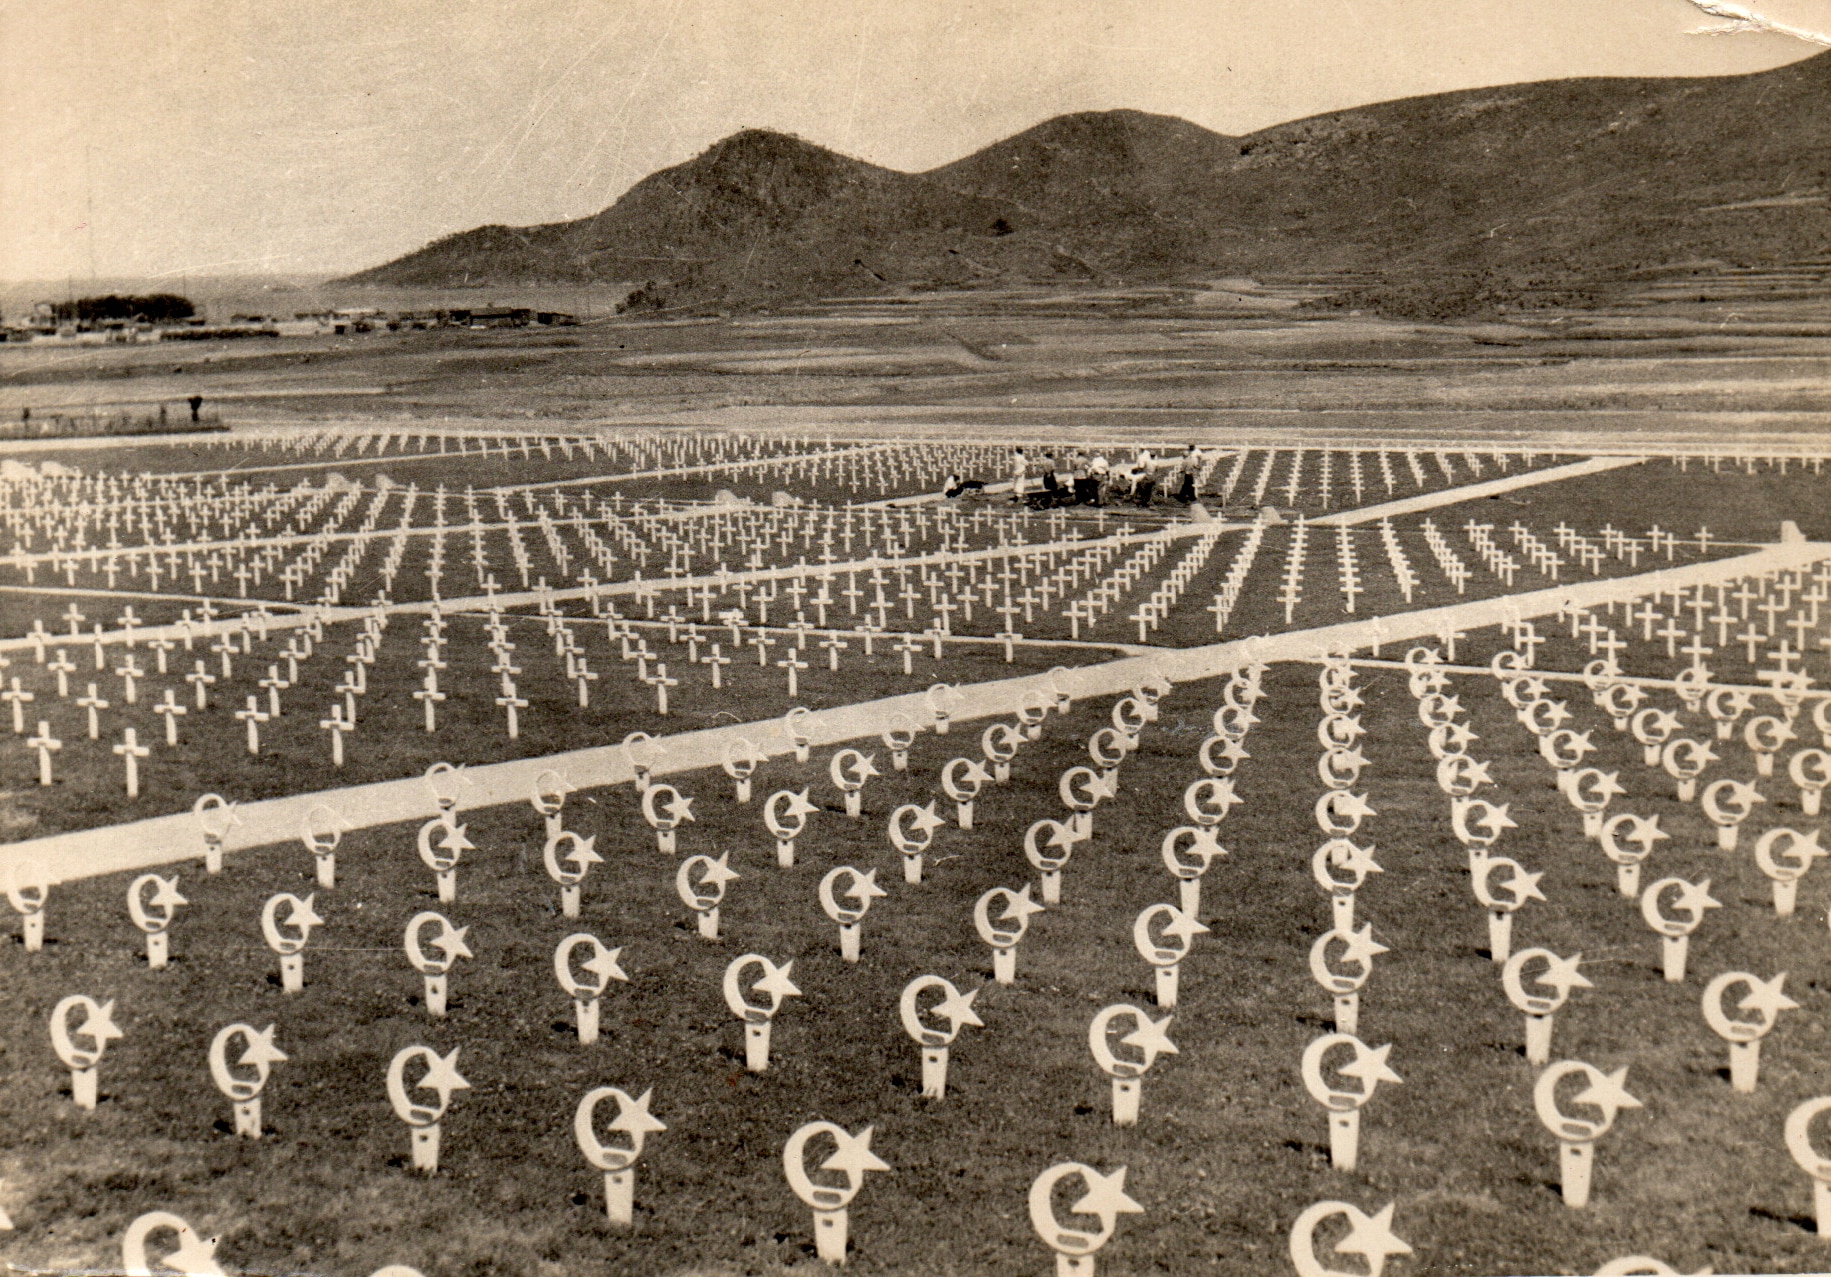 UN Memorial Cemetery in Busan, Korea in 1953